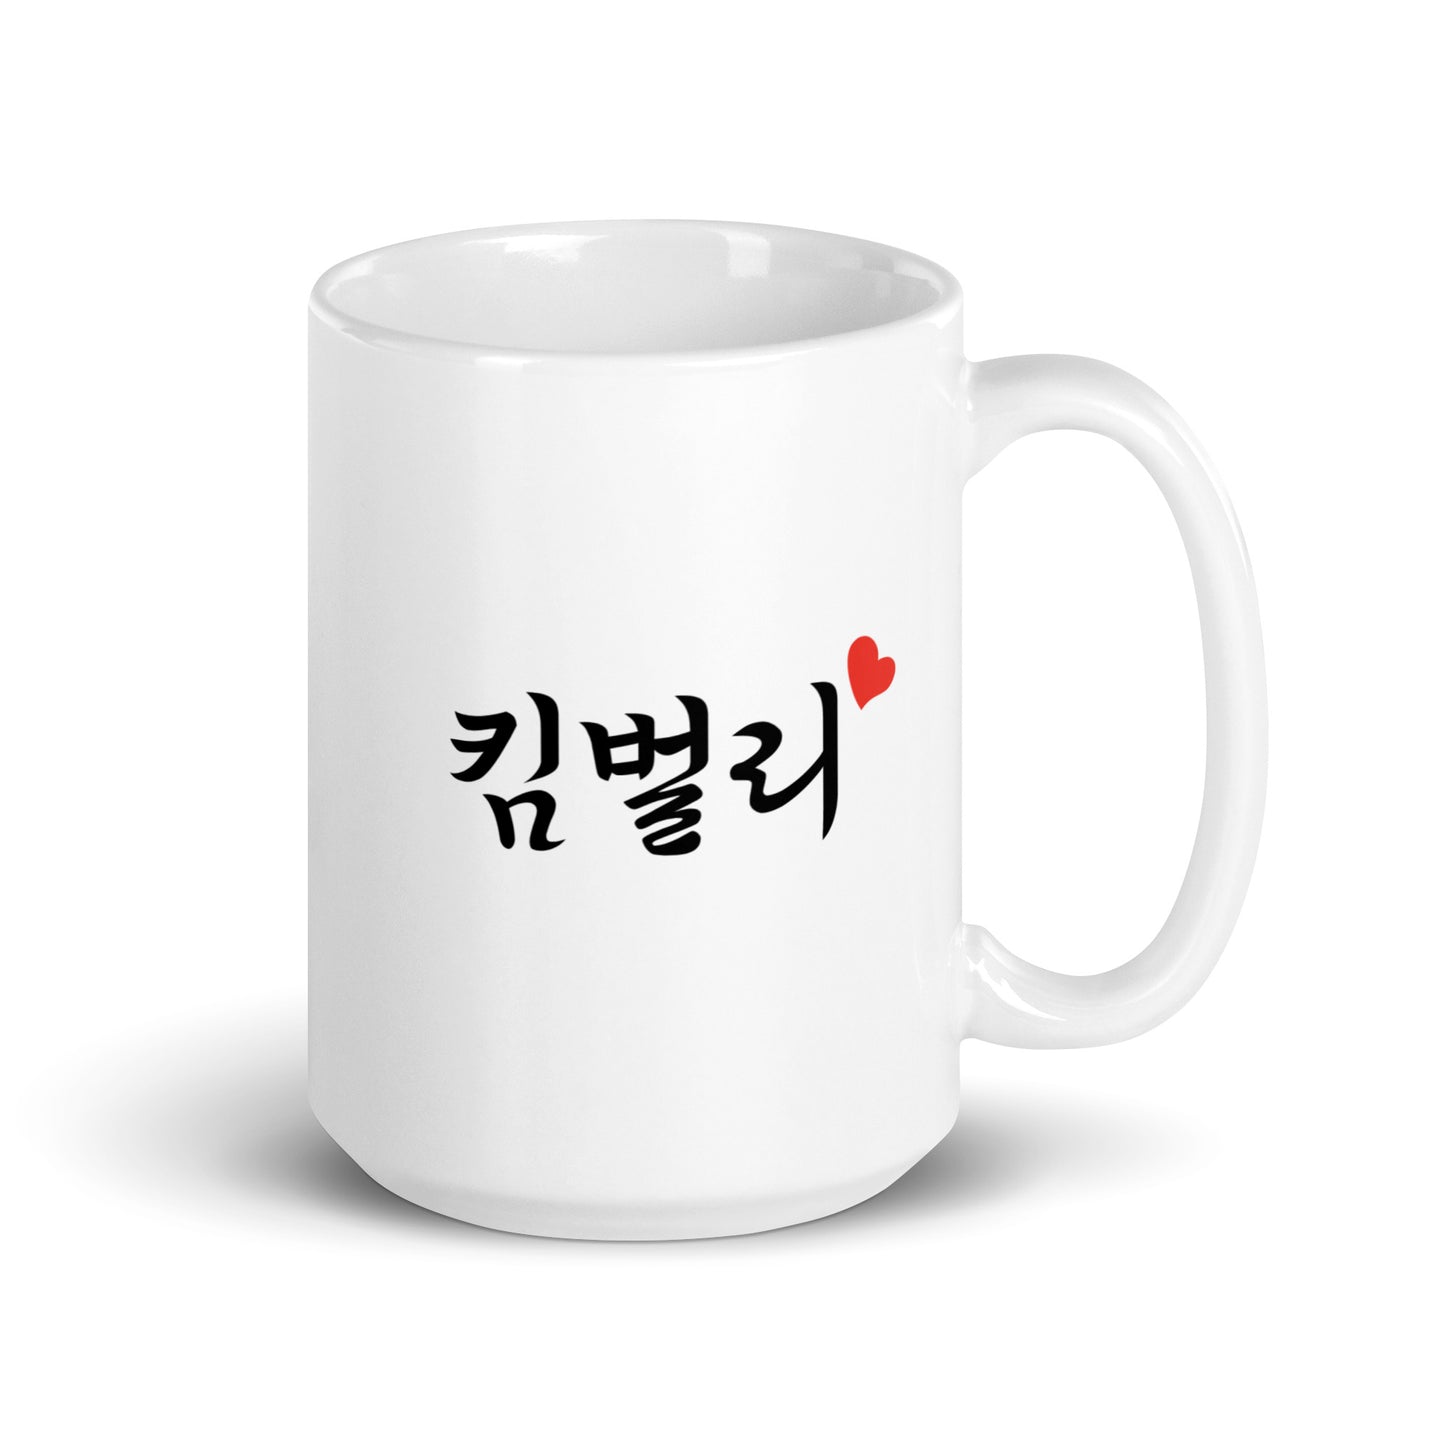 Kimberly in Hangul Custom Name Gift Ceramic Mug